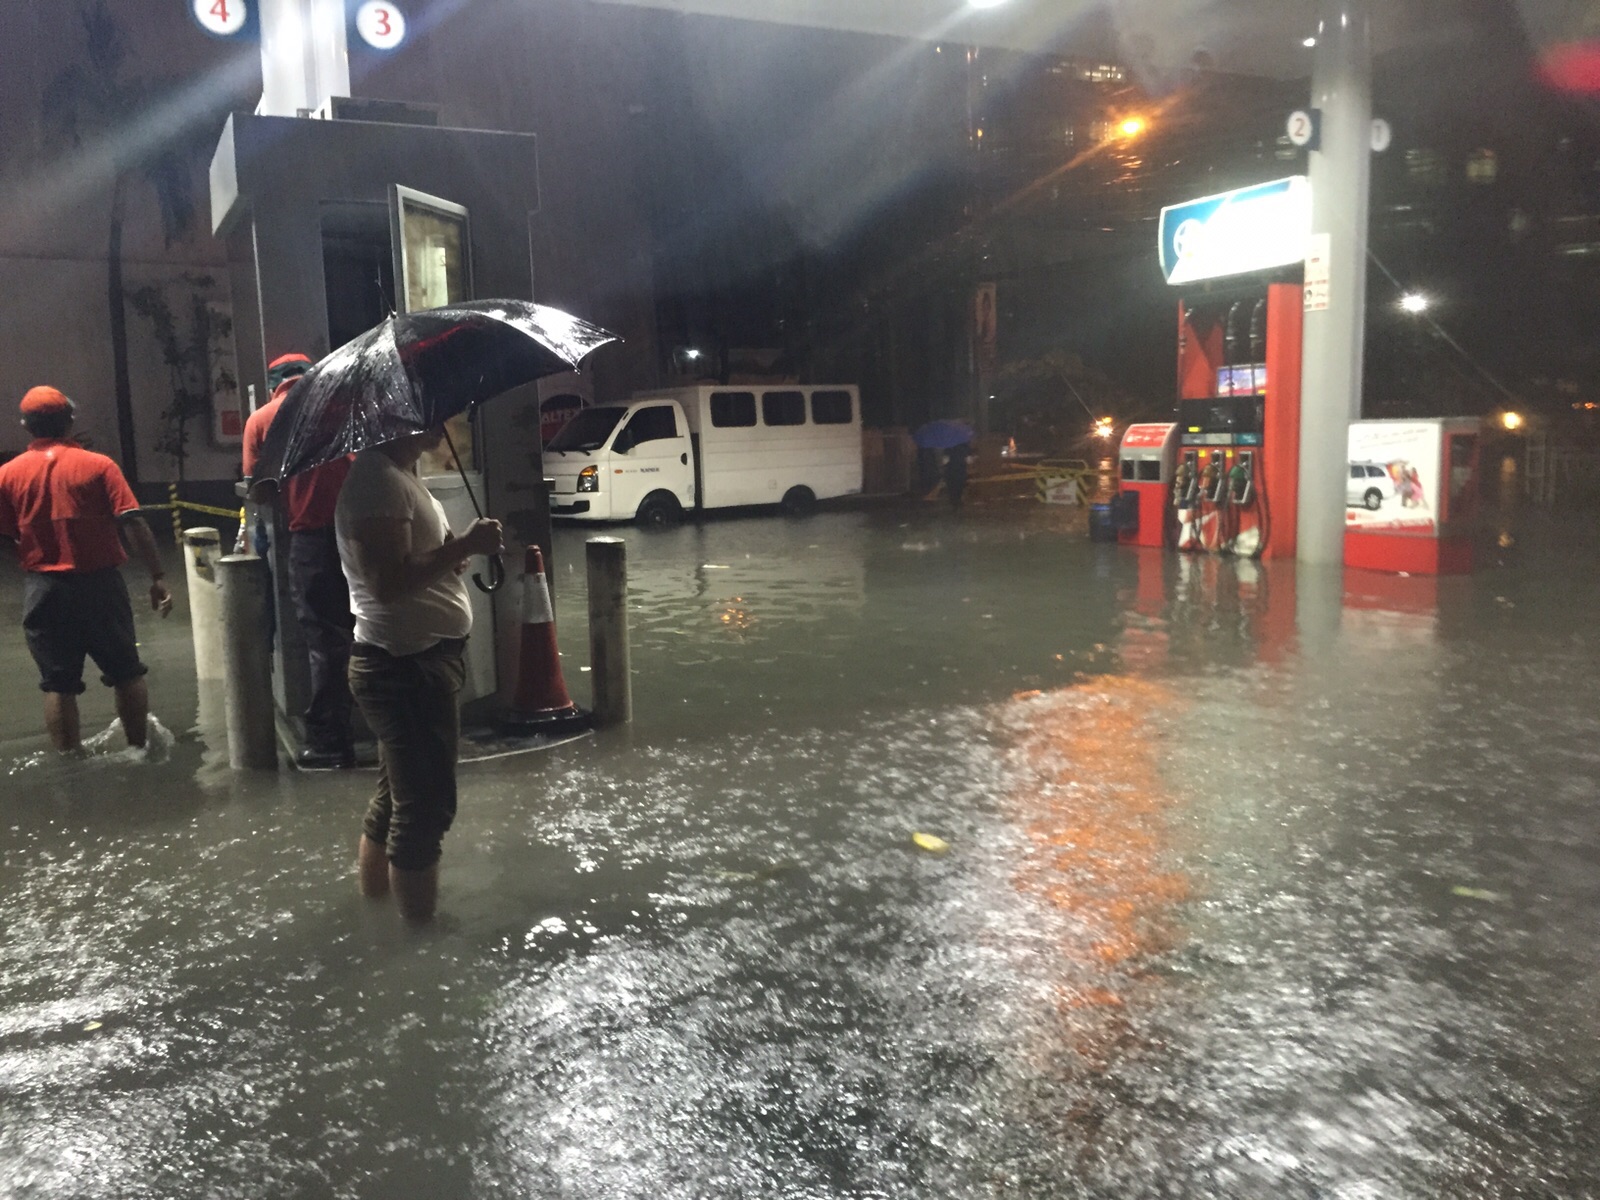 IN PHOTOS: Heavy rains flood parts of Metro Manila | Inquirer News